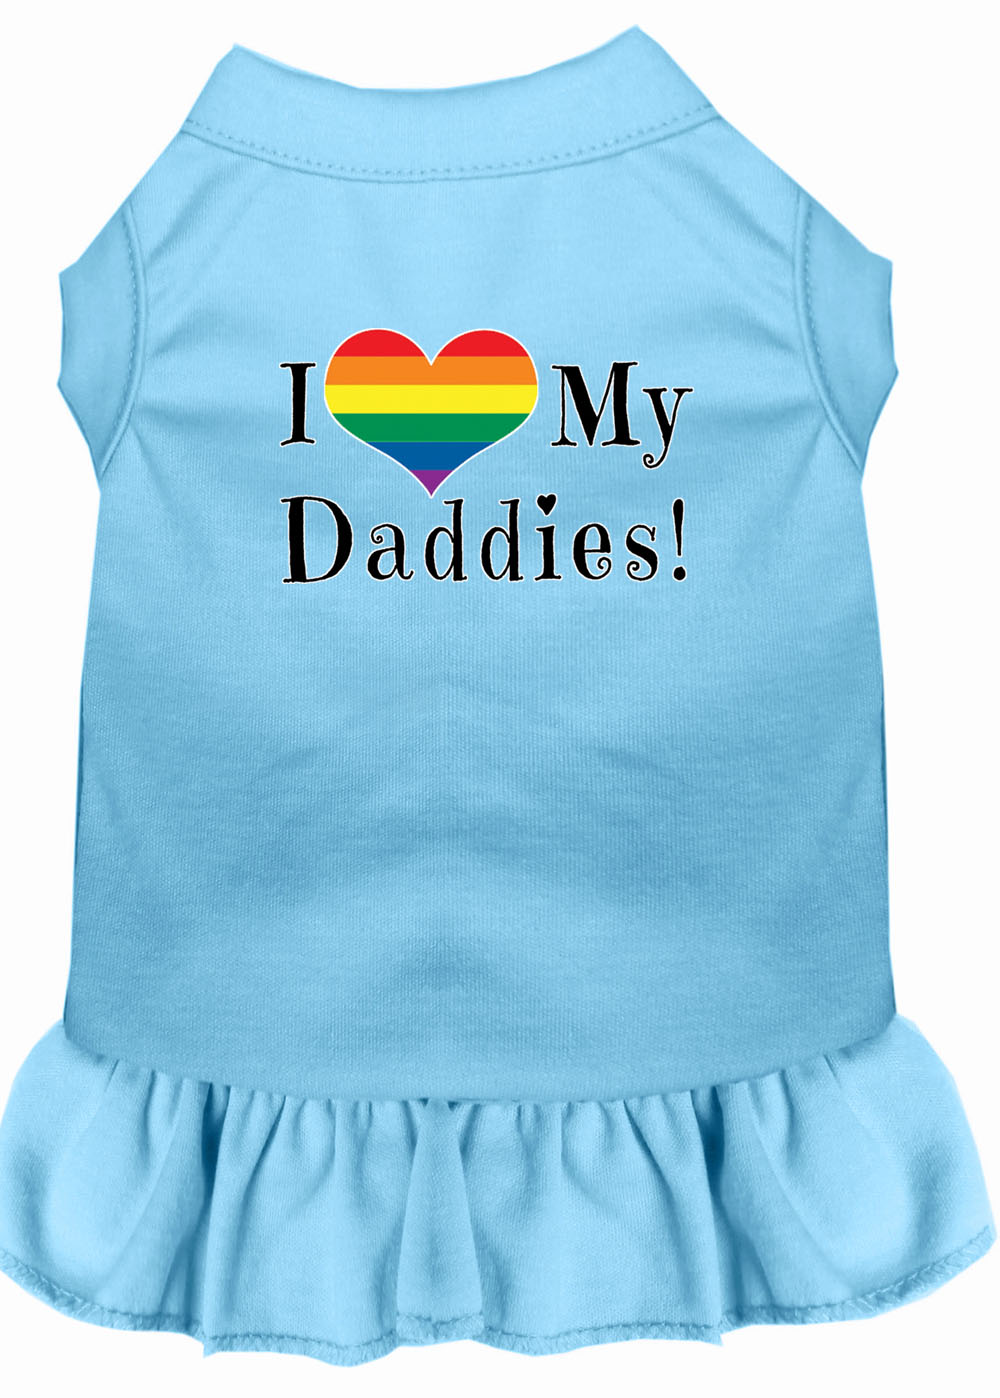 I Heart my Daddies Screen Print Dog Dress Baby Blue XS